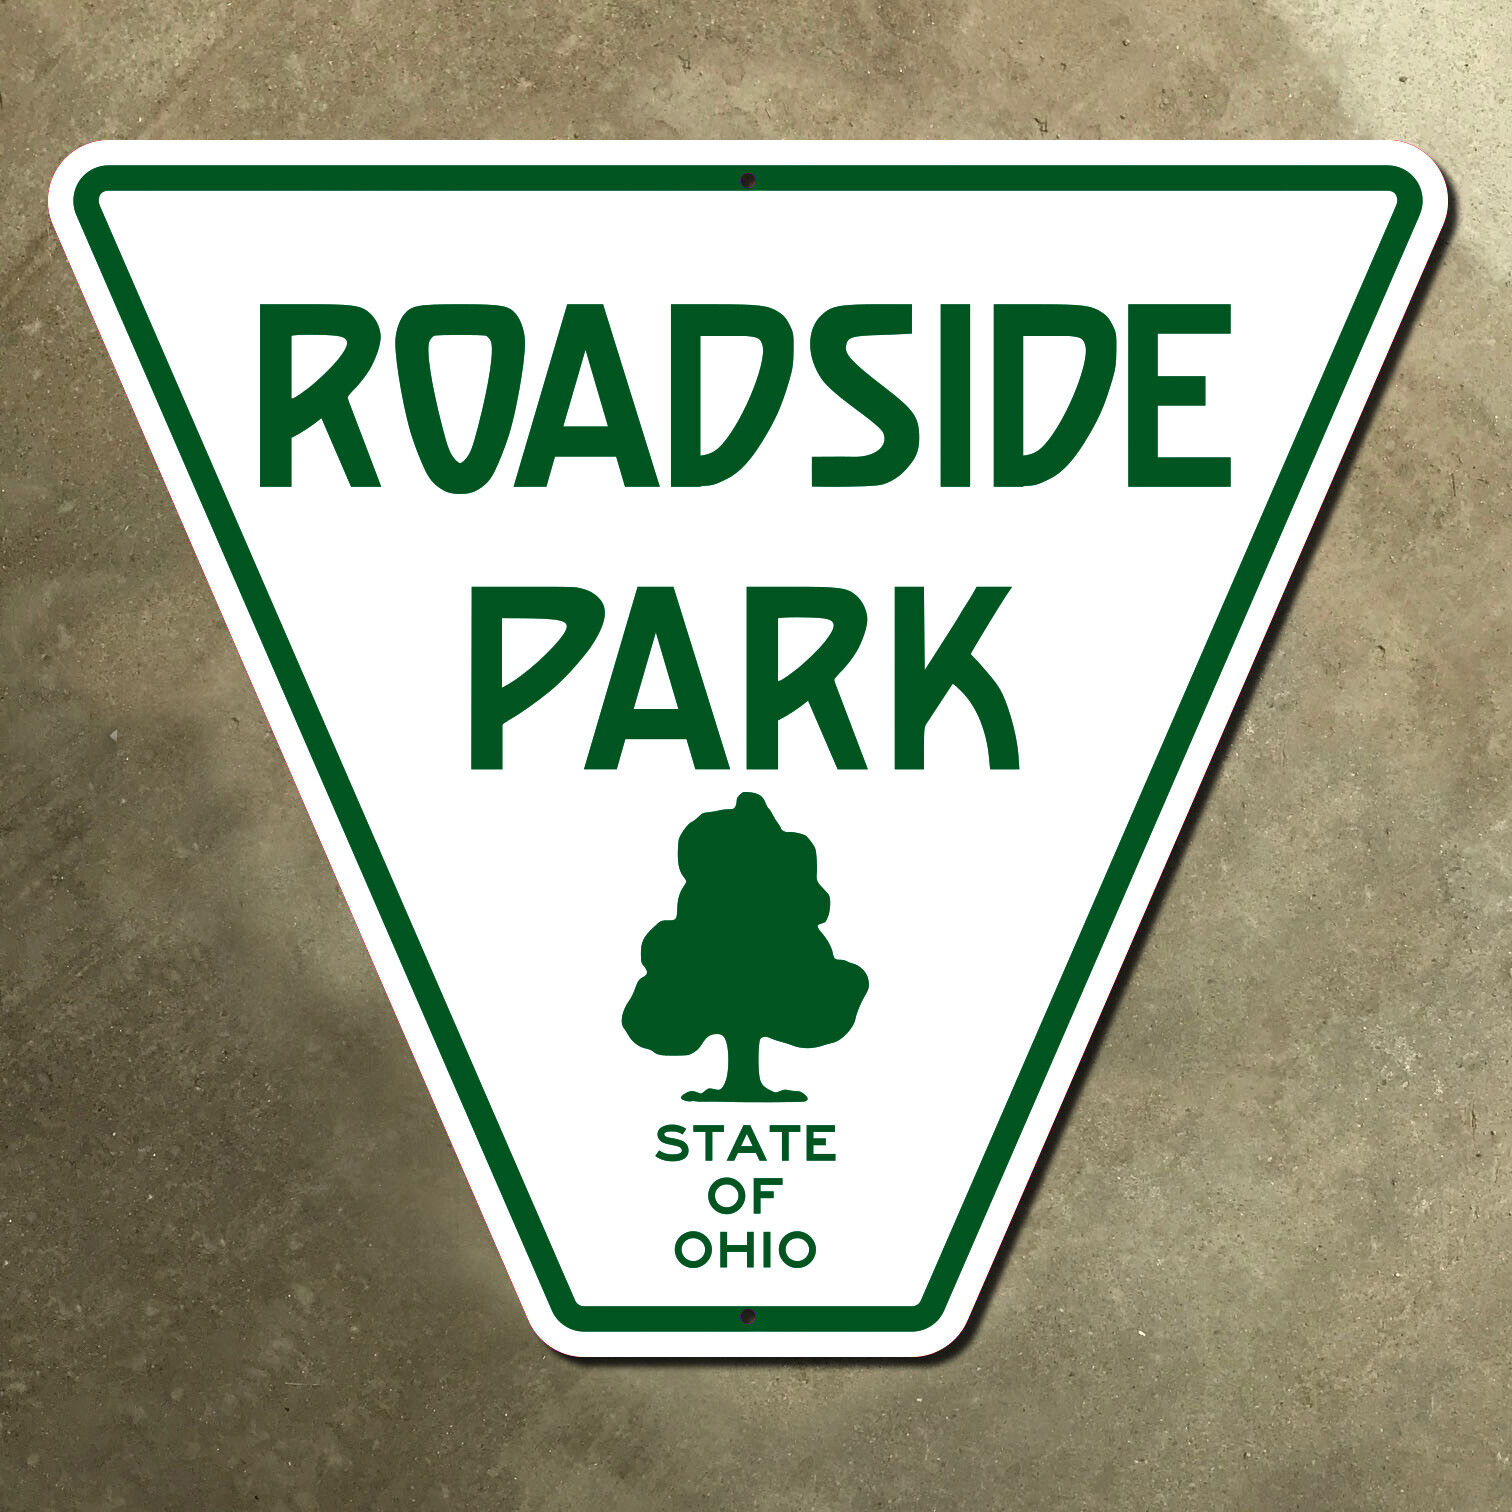 Ohio Roadside Park marker road highway sign tree rest picnic area 11x10